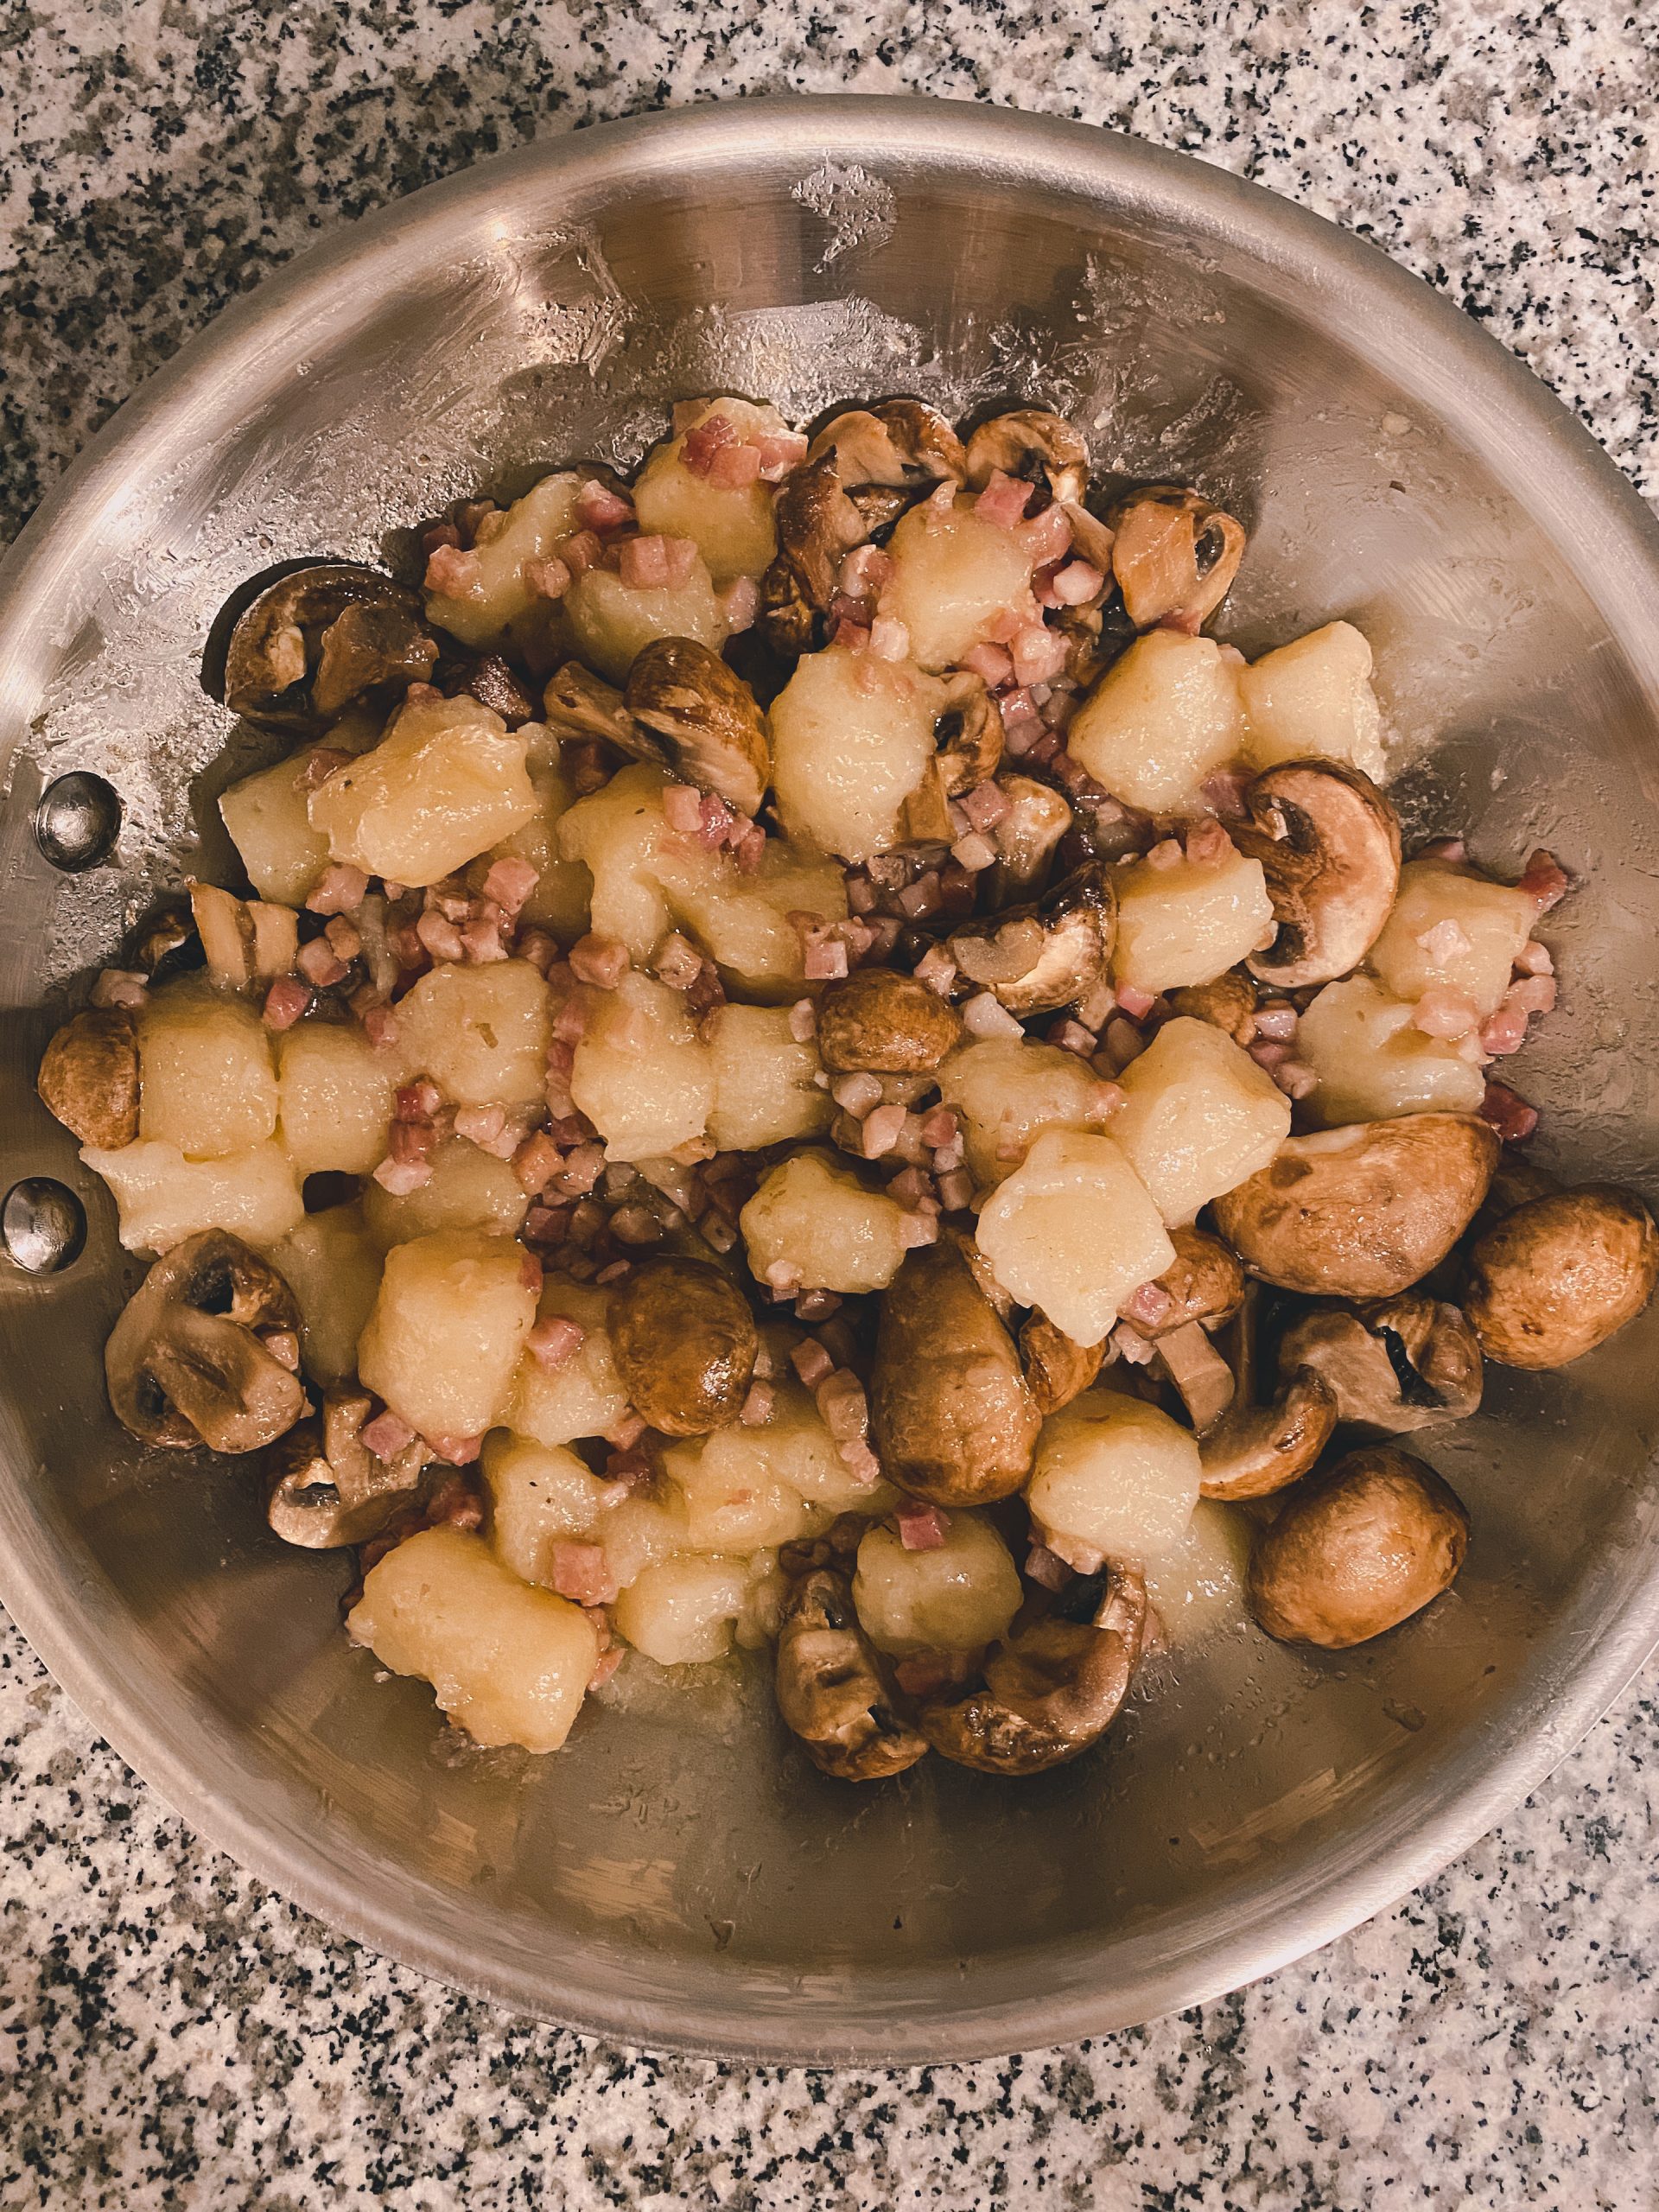 cauliflower gnocchi with mushrooms and pancetta 3-ingredient trader joe's meal